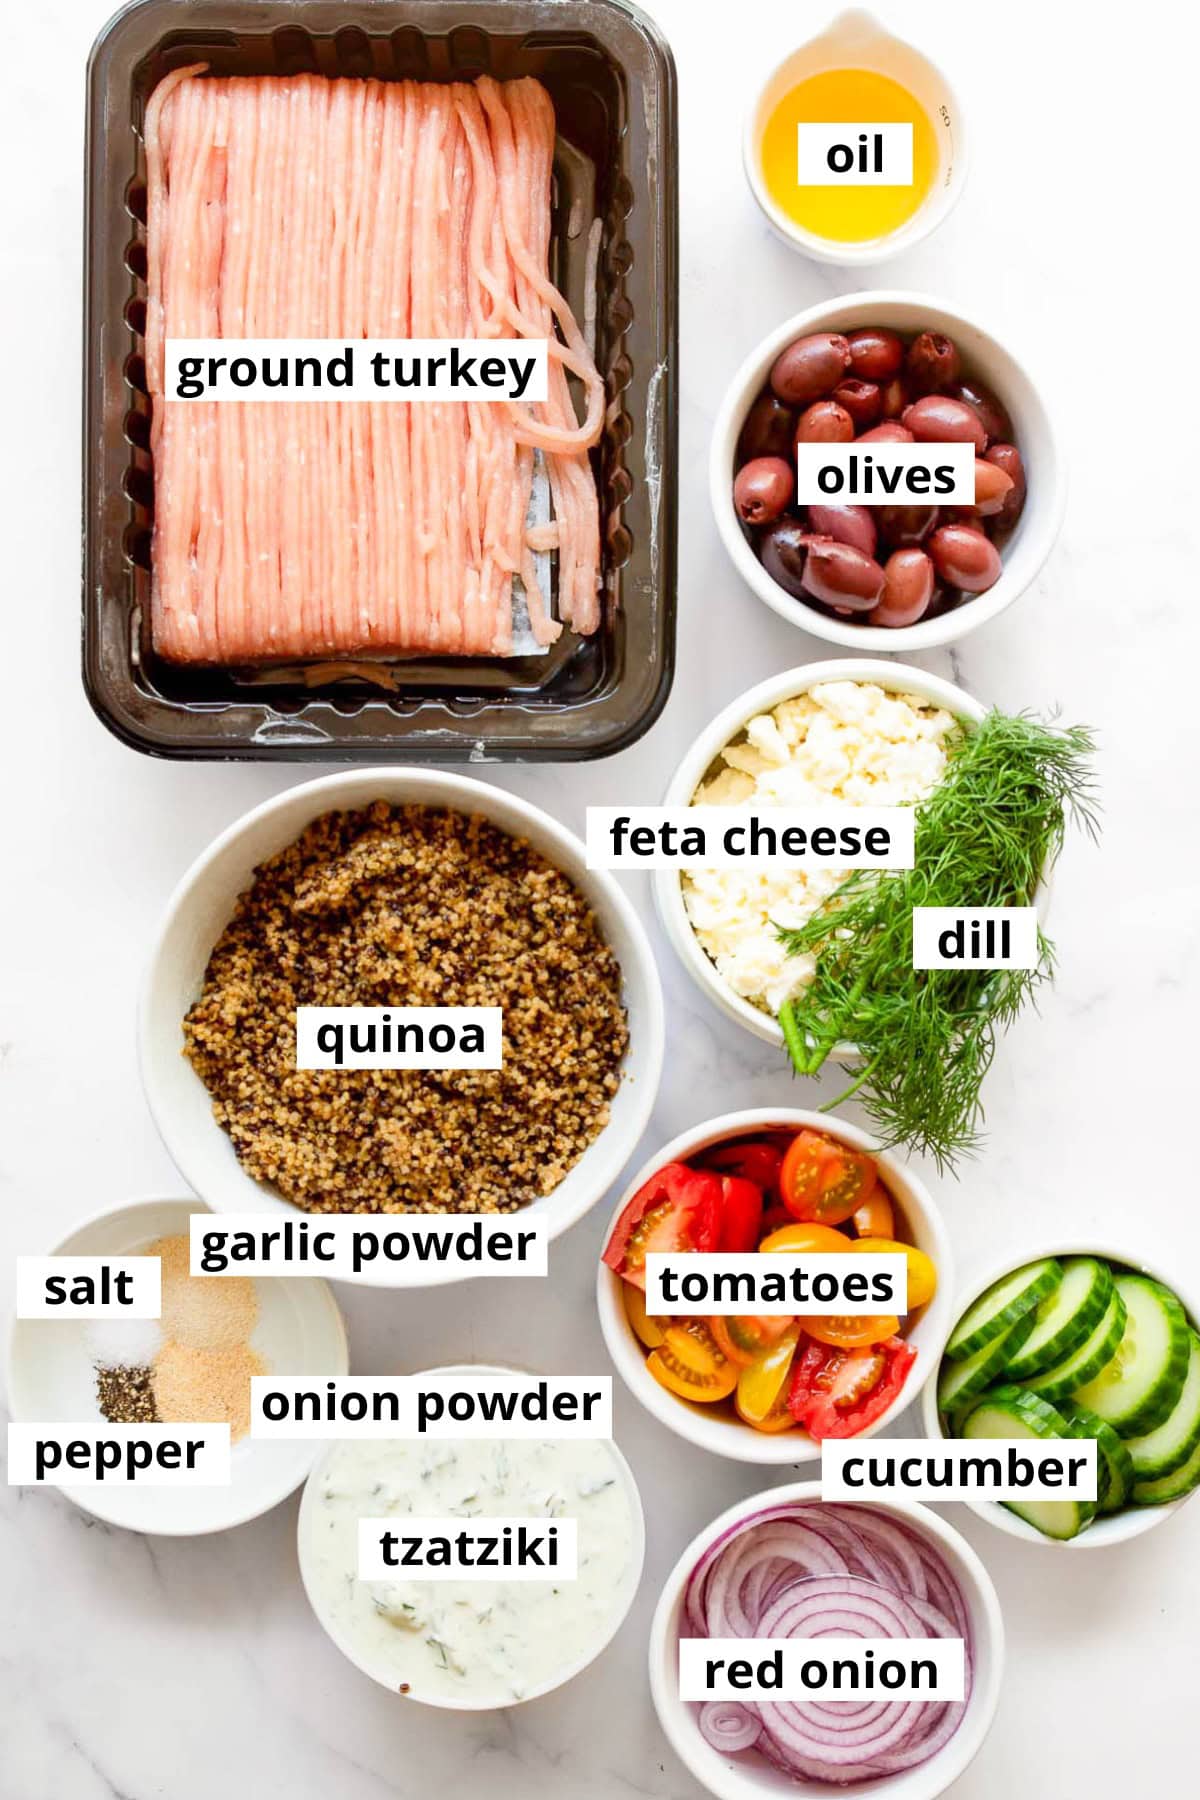 Ground turkey, olives, oil, feta cheese, dill, quinoa, tomatoes, cucumber, tzatziki, red onion, garlic powder, onion powder, salt and pepper.